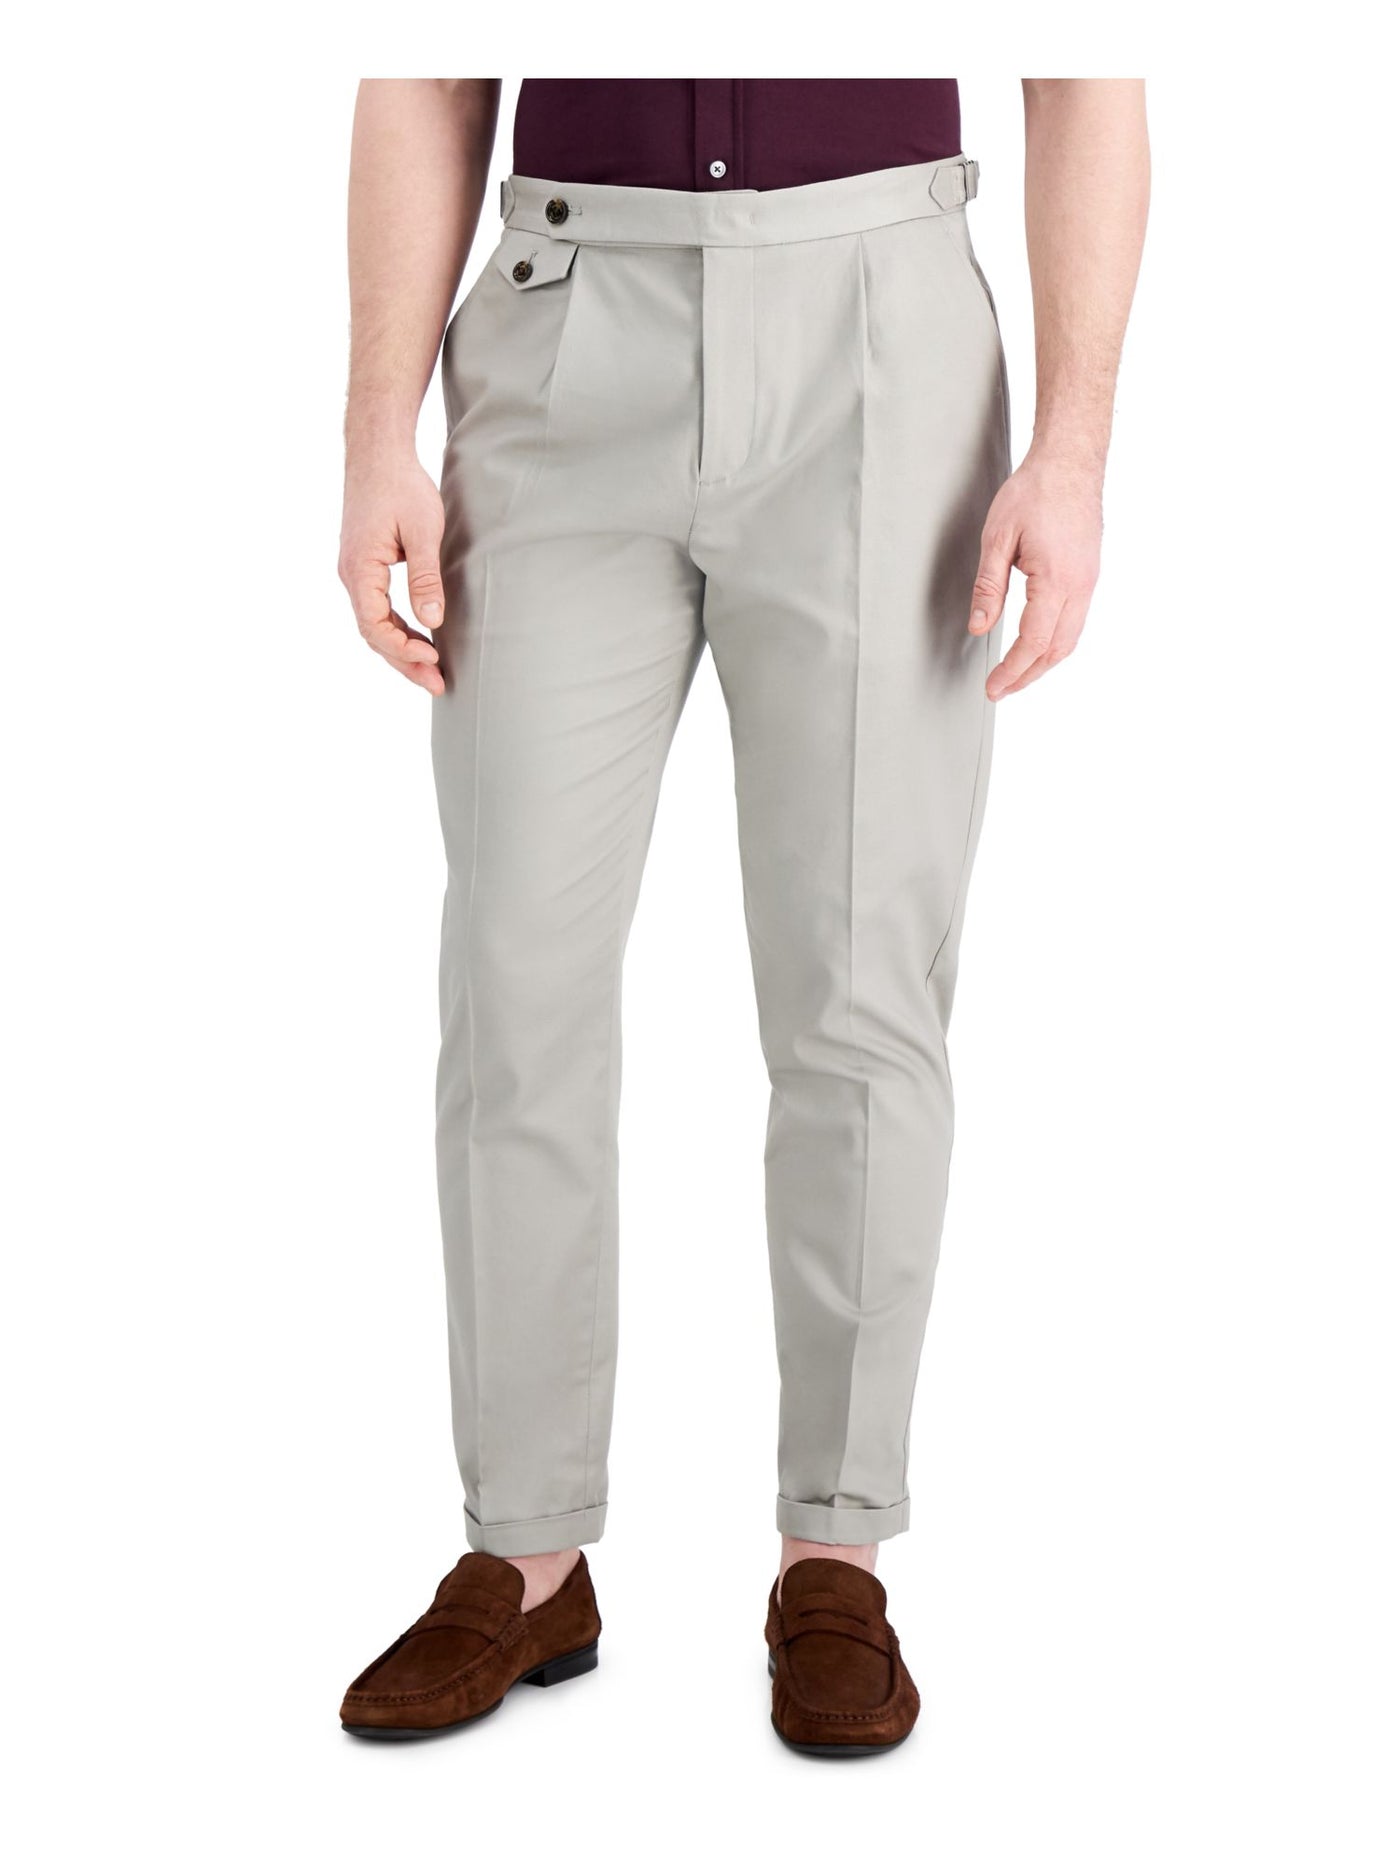 TASSO ELBA Mens Fashion Gray Pleated Tapered Classic Fit Stretch Pants 32W X 32L